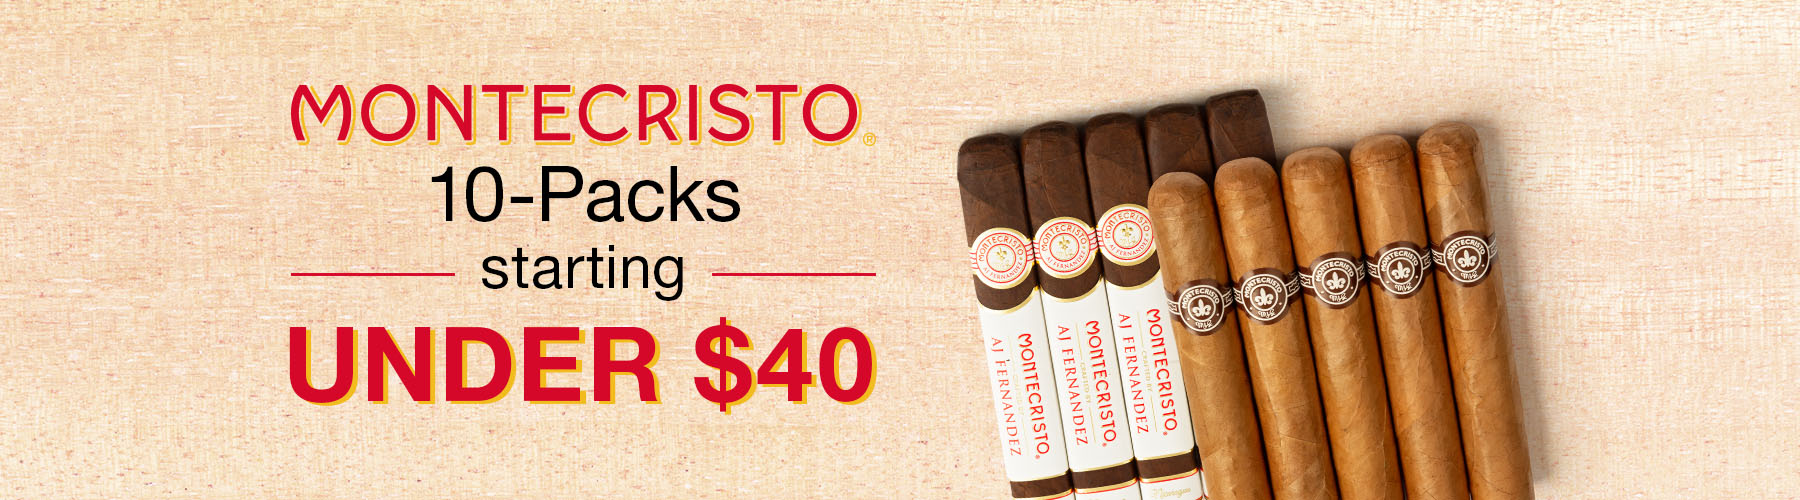 Montecristo 10-Packs starting under $40!